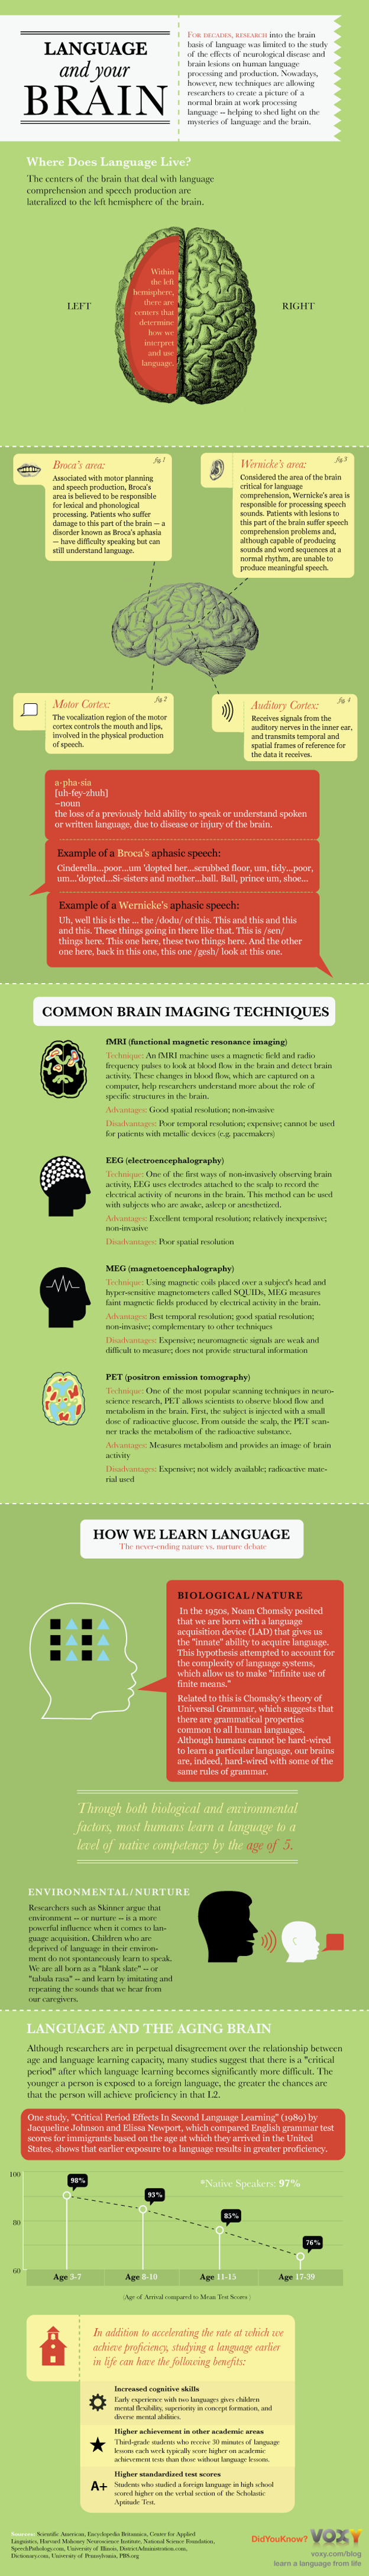 Language and Brain - Infographics - Immagine: www.voxyblog.com